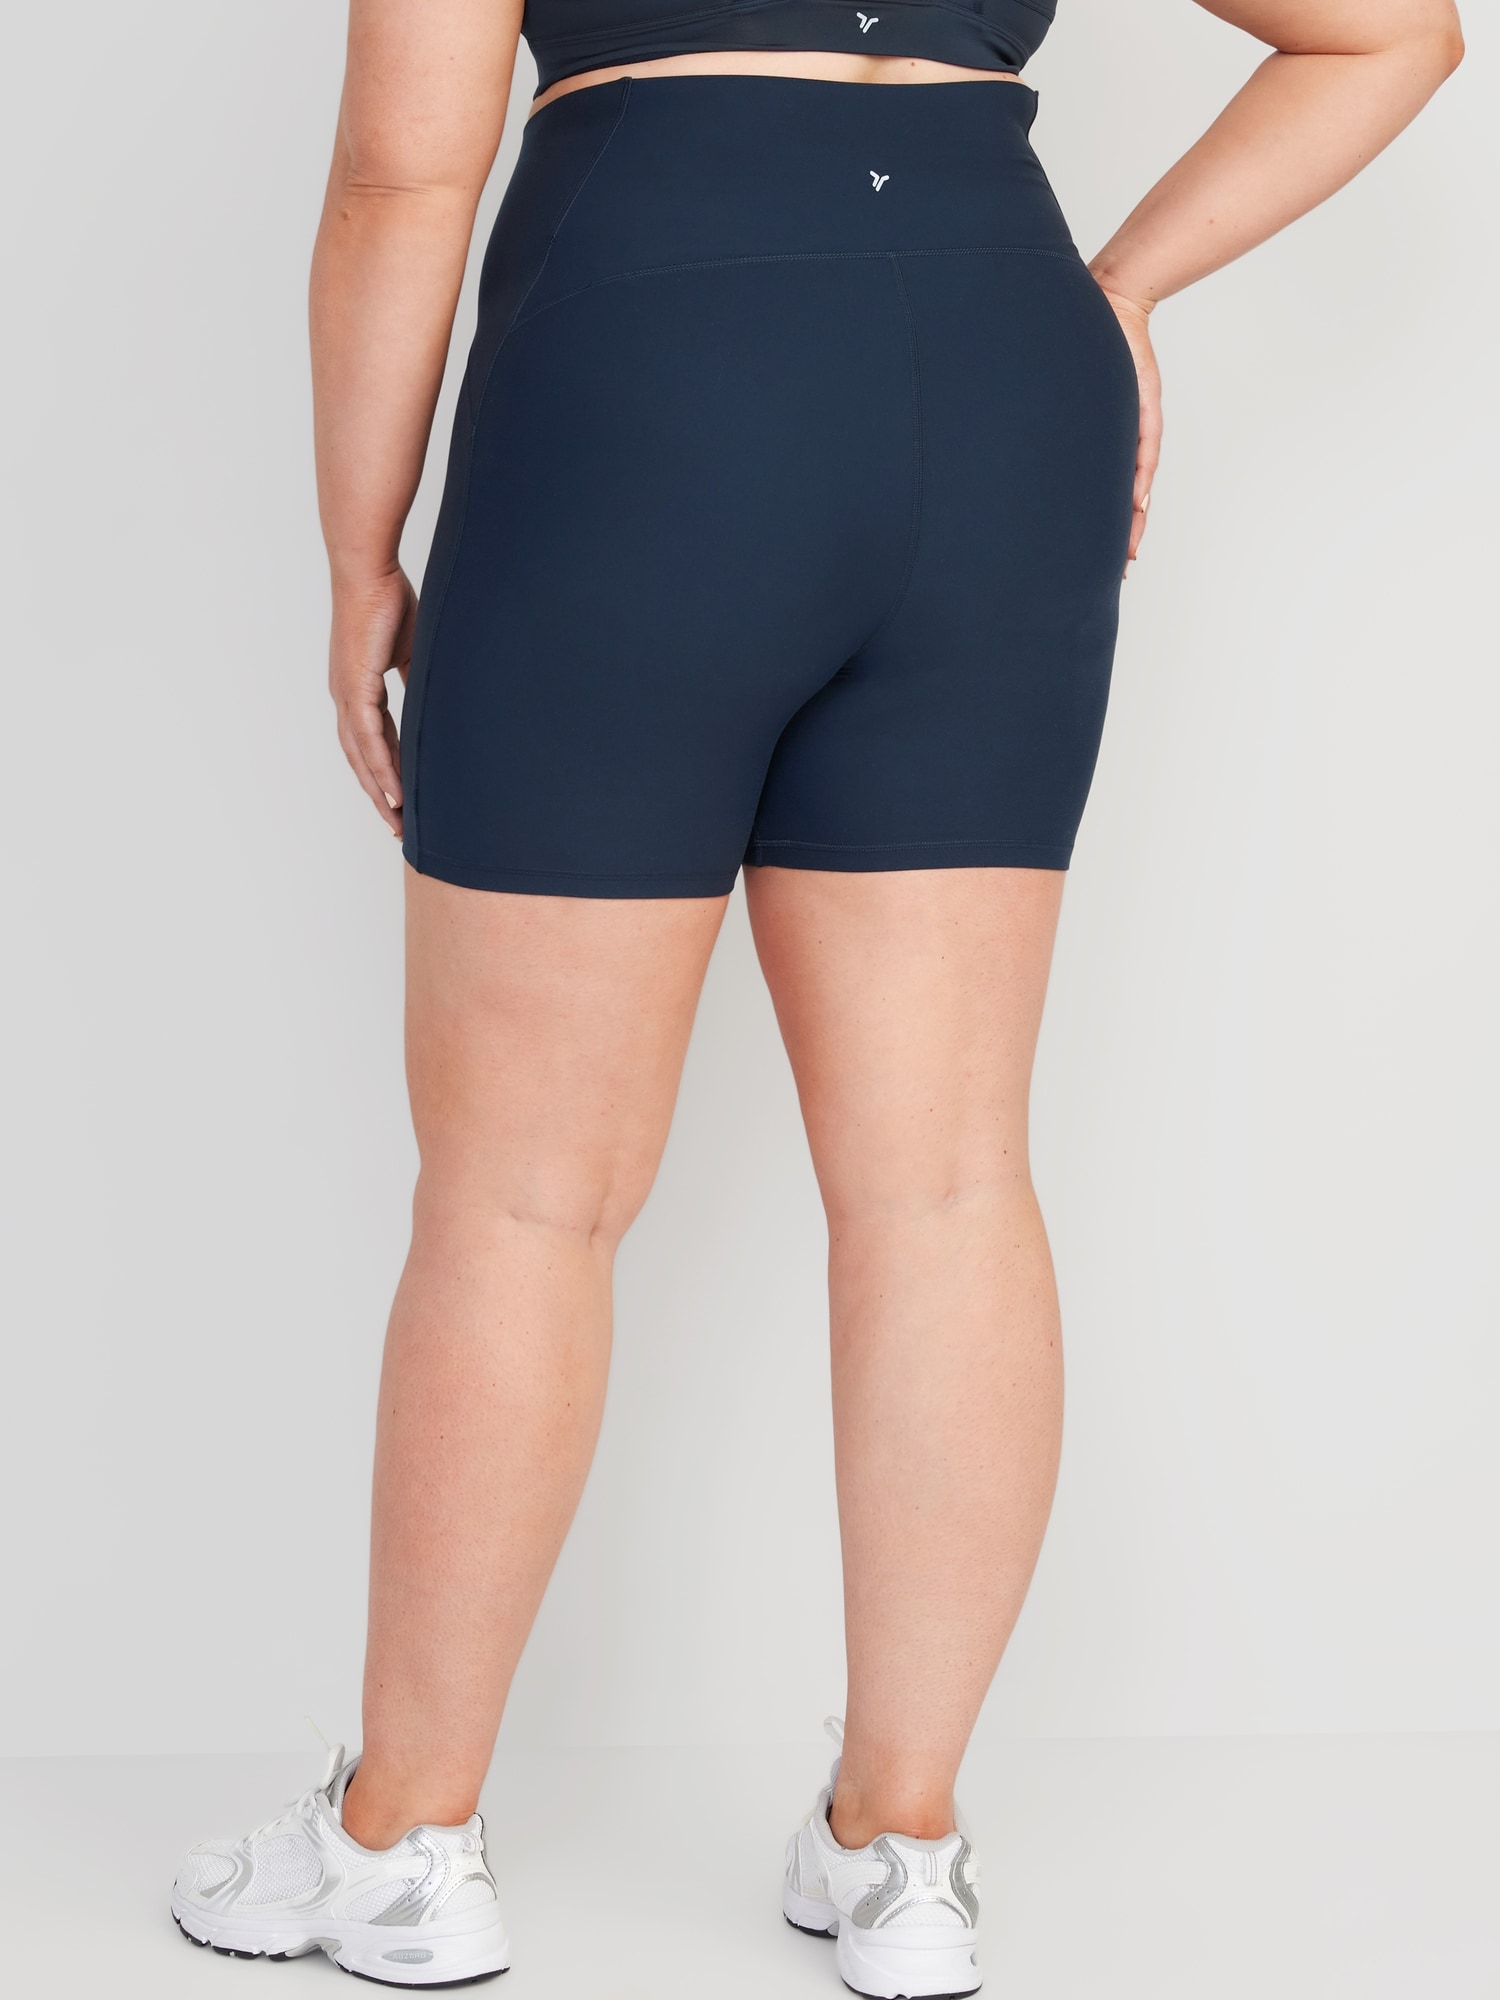 Extra High-Waisted inseam 6-inch Navy -- Shorts for Biker Old Women PowerLite ADAPTIV Lycra® 